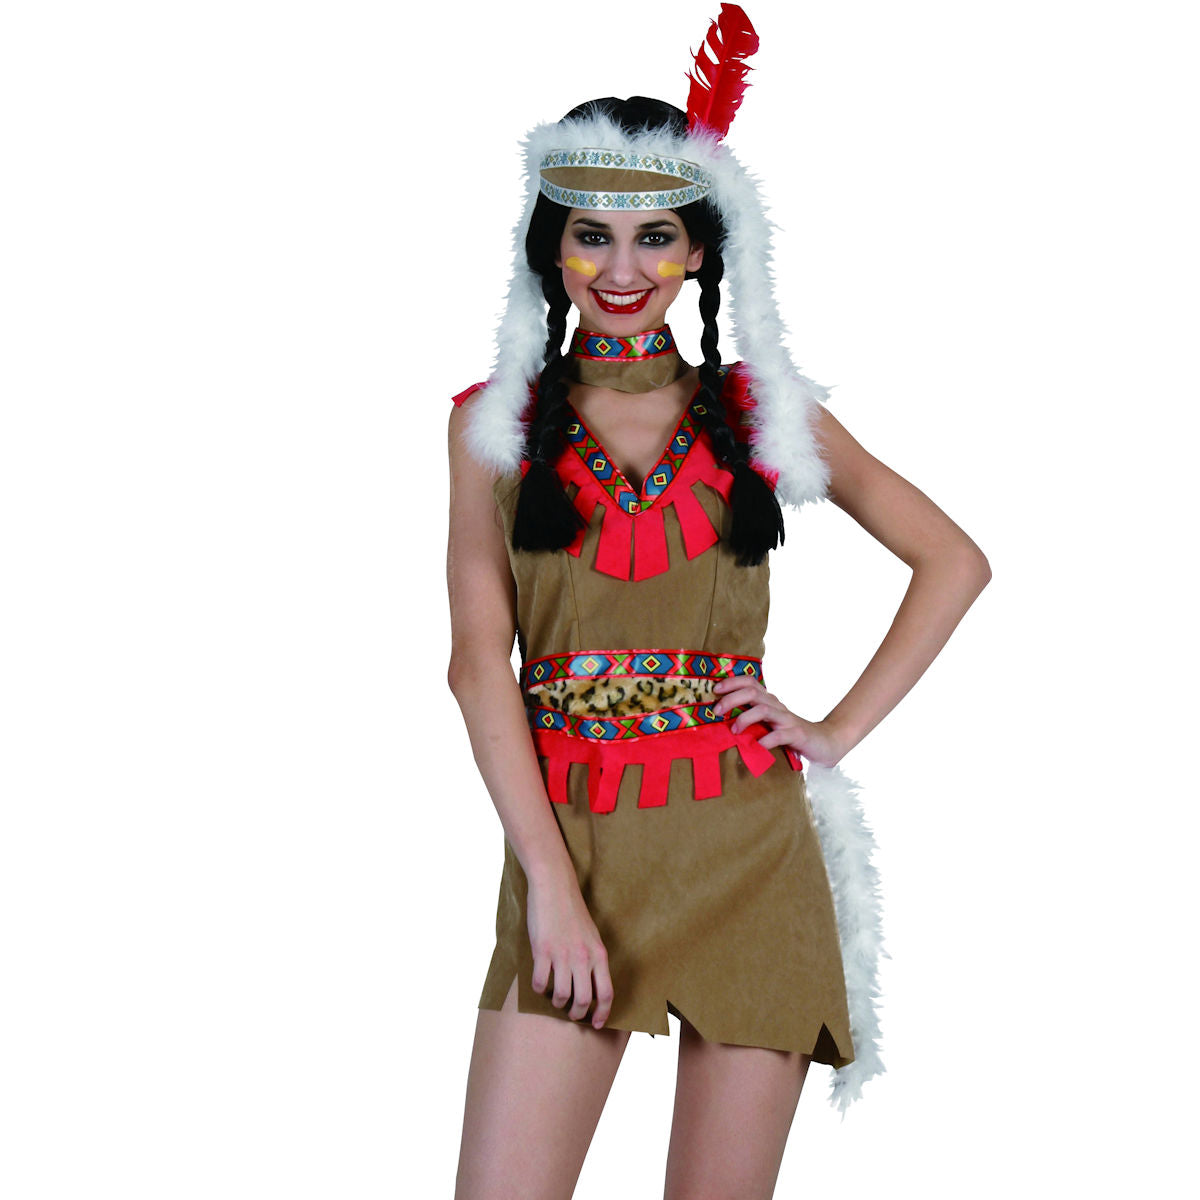 Indian Princess Pocahontas Women's Fancy Dress Costume with Headpiece